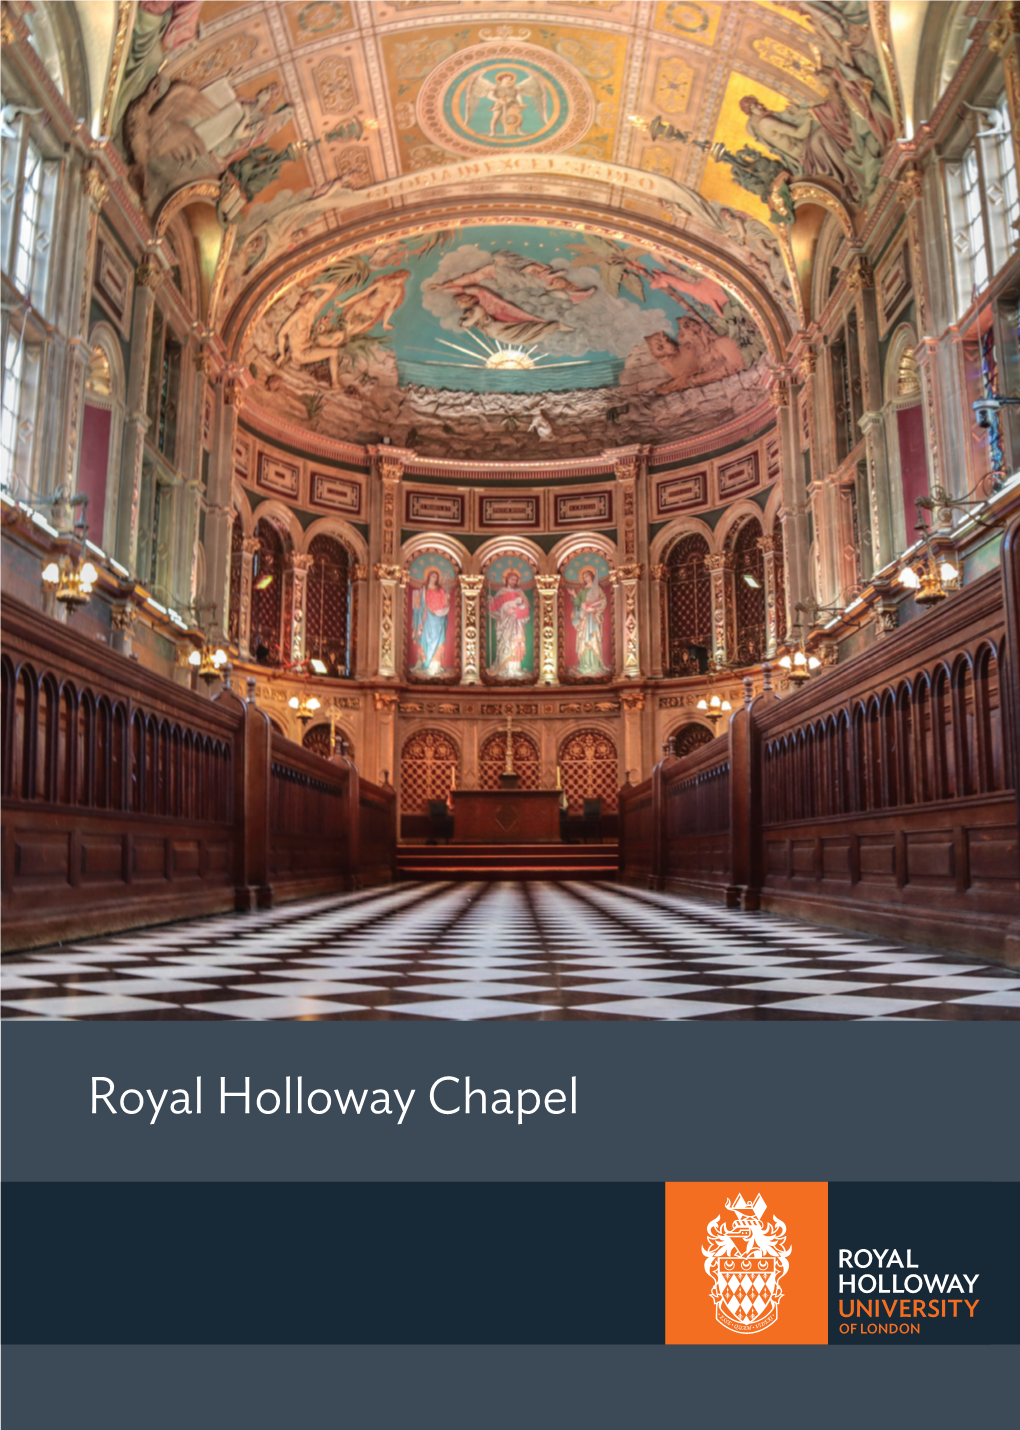 Royal Holloway Chapel the Chapel